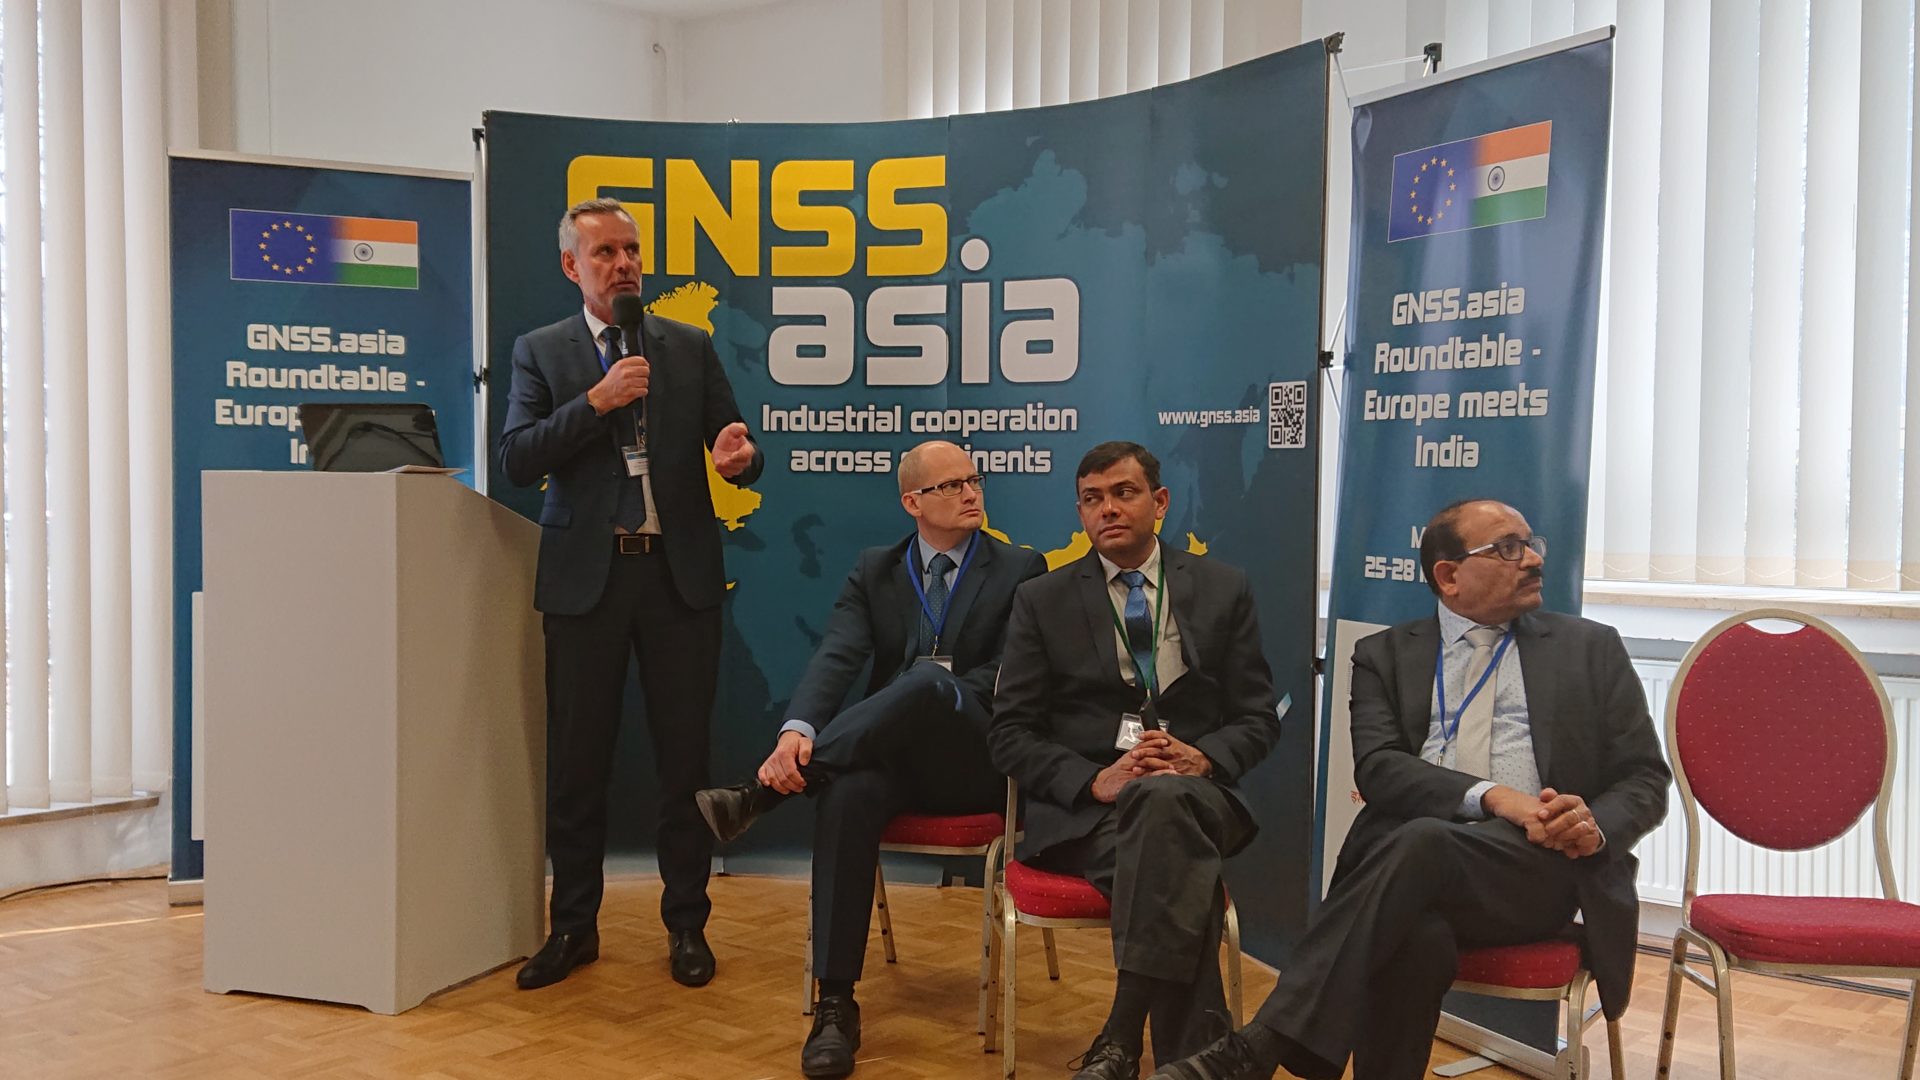 Europe met India at GNSS.asia Roundtable Munich SatNav Summit